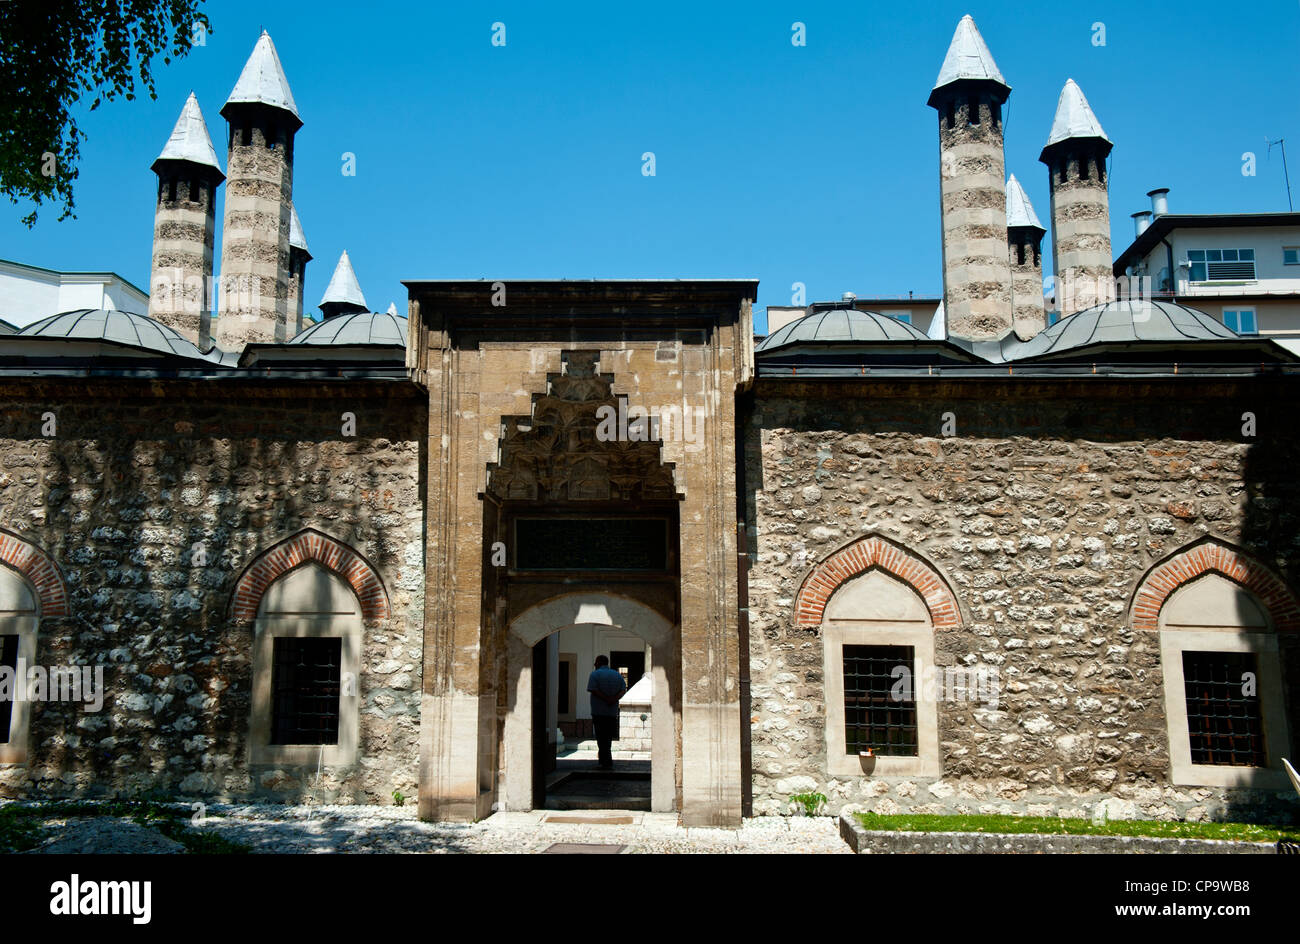 Gazi Husrev-Bey Madrasa, bekannt als Kursumli, gebaut im Jahre 1537. Sarajevo. Bosnien und Herzegowina. Balkan. Europa. Stockfoto